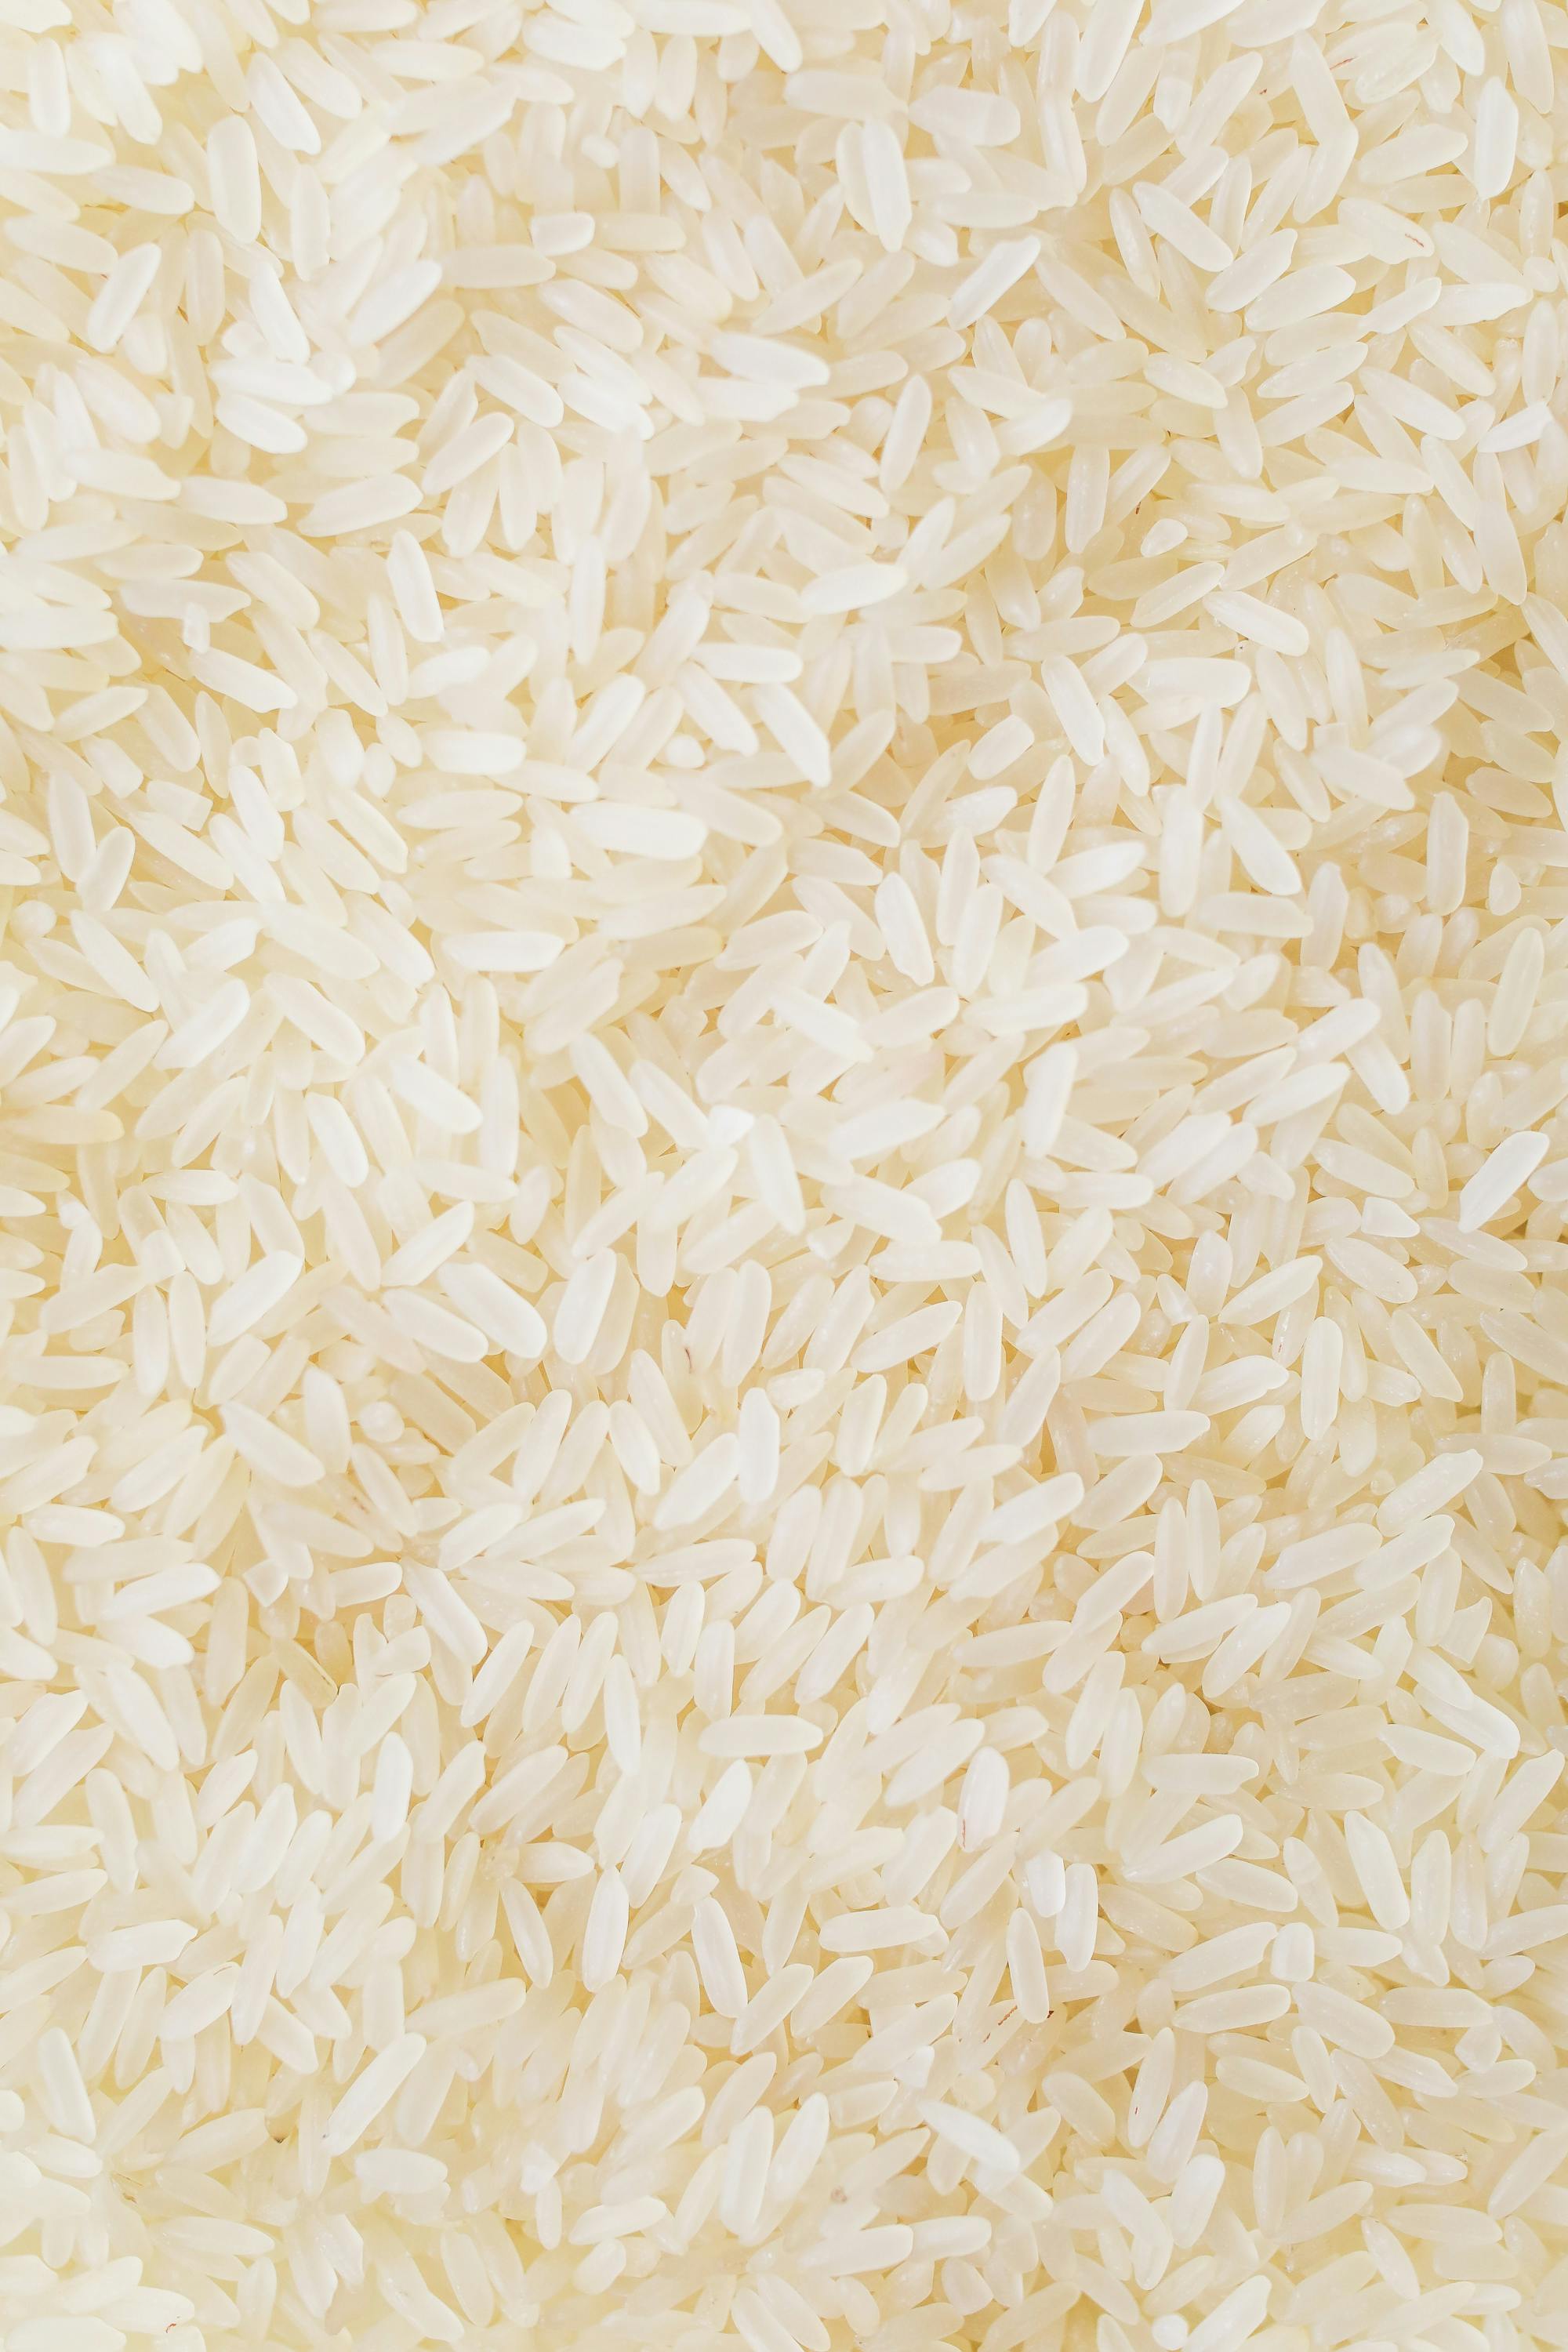 21,780 Rice Grain Macro Stock Photos - Free & Royalty-Free Stock Photos  from Dreamstime